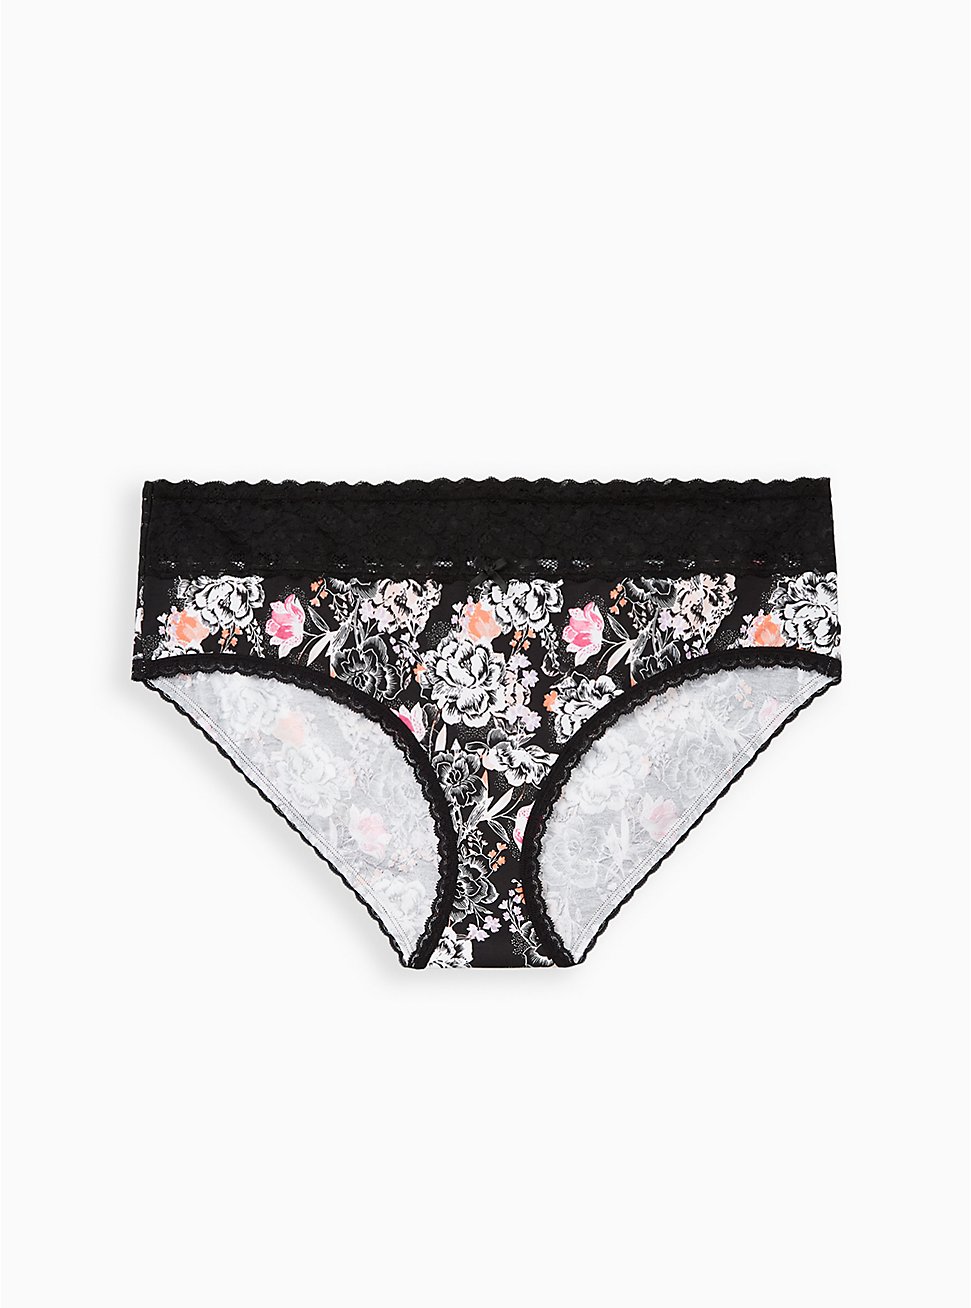 Plus Size - Black Floral Wide Lace Cotton Hipster Panty - Torrid